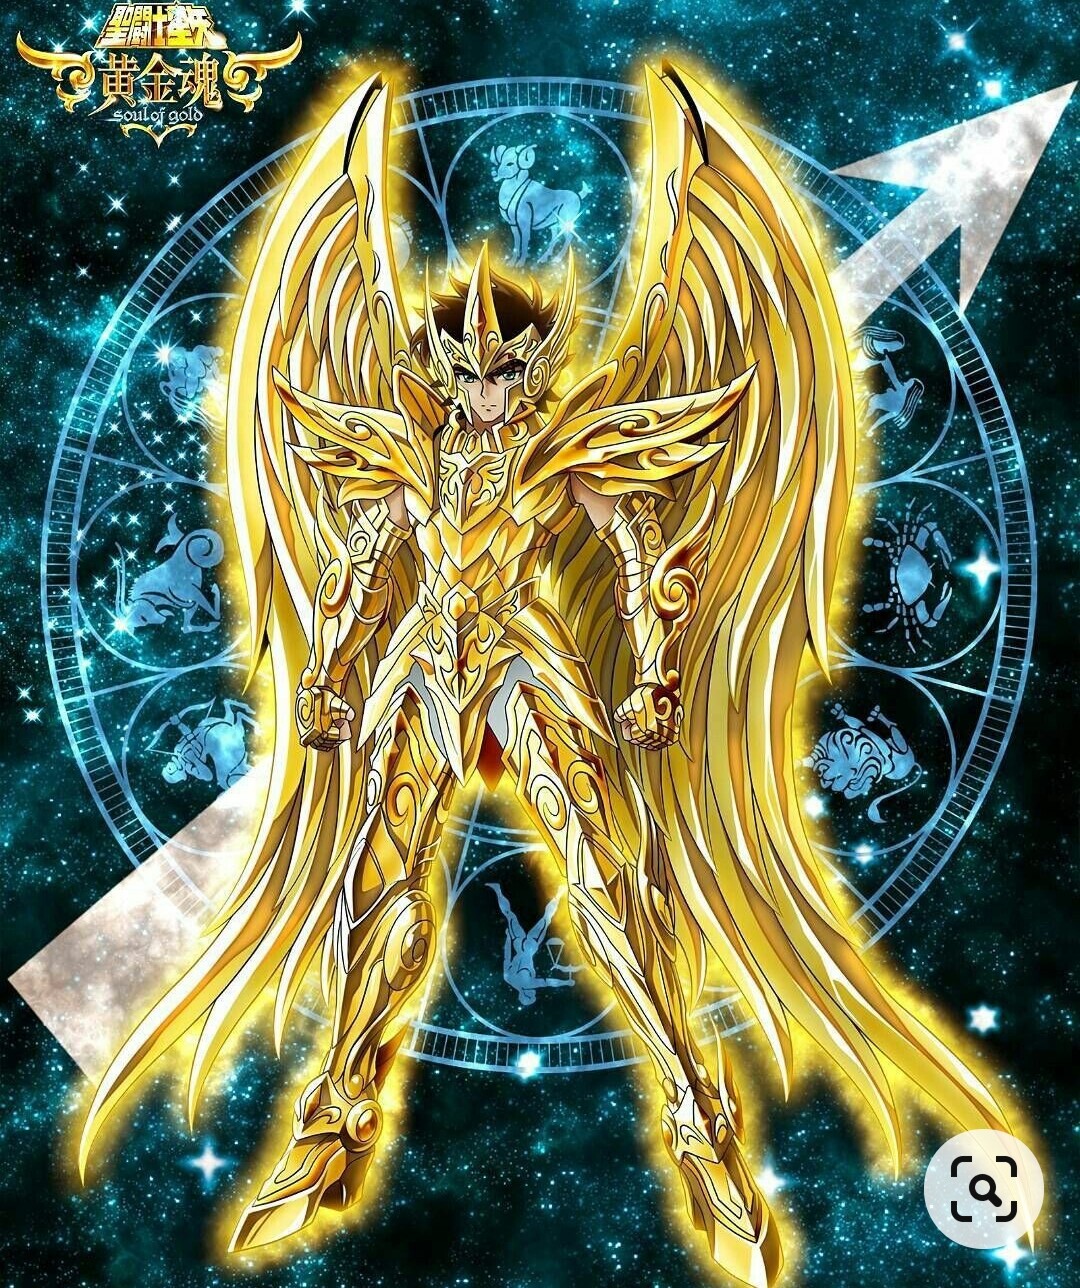 Saint Seiya Soul of Gold Myth Cloth EX - Sagittarius Aiolos